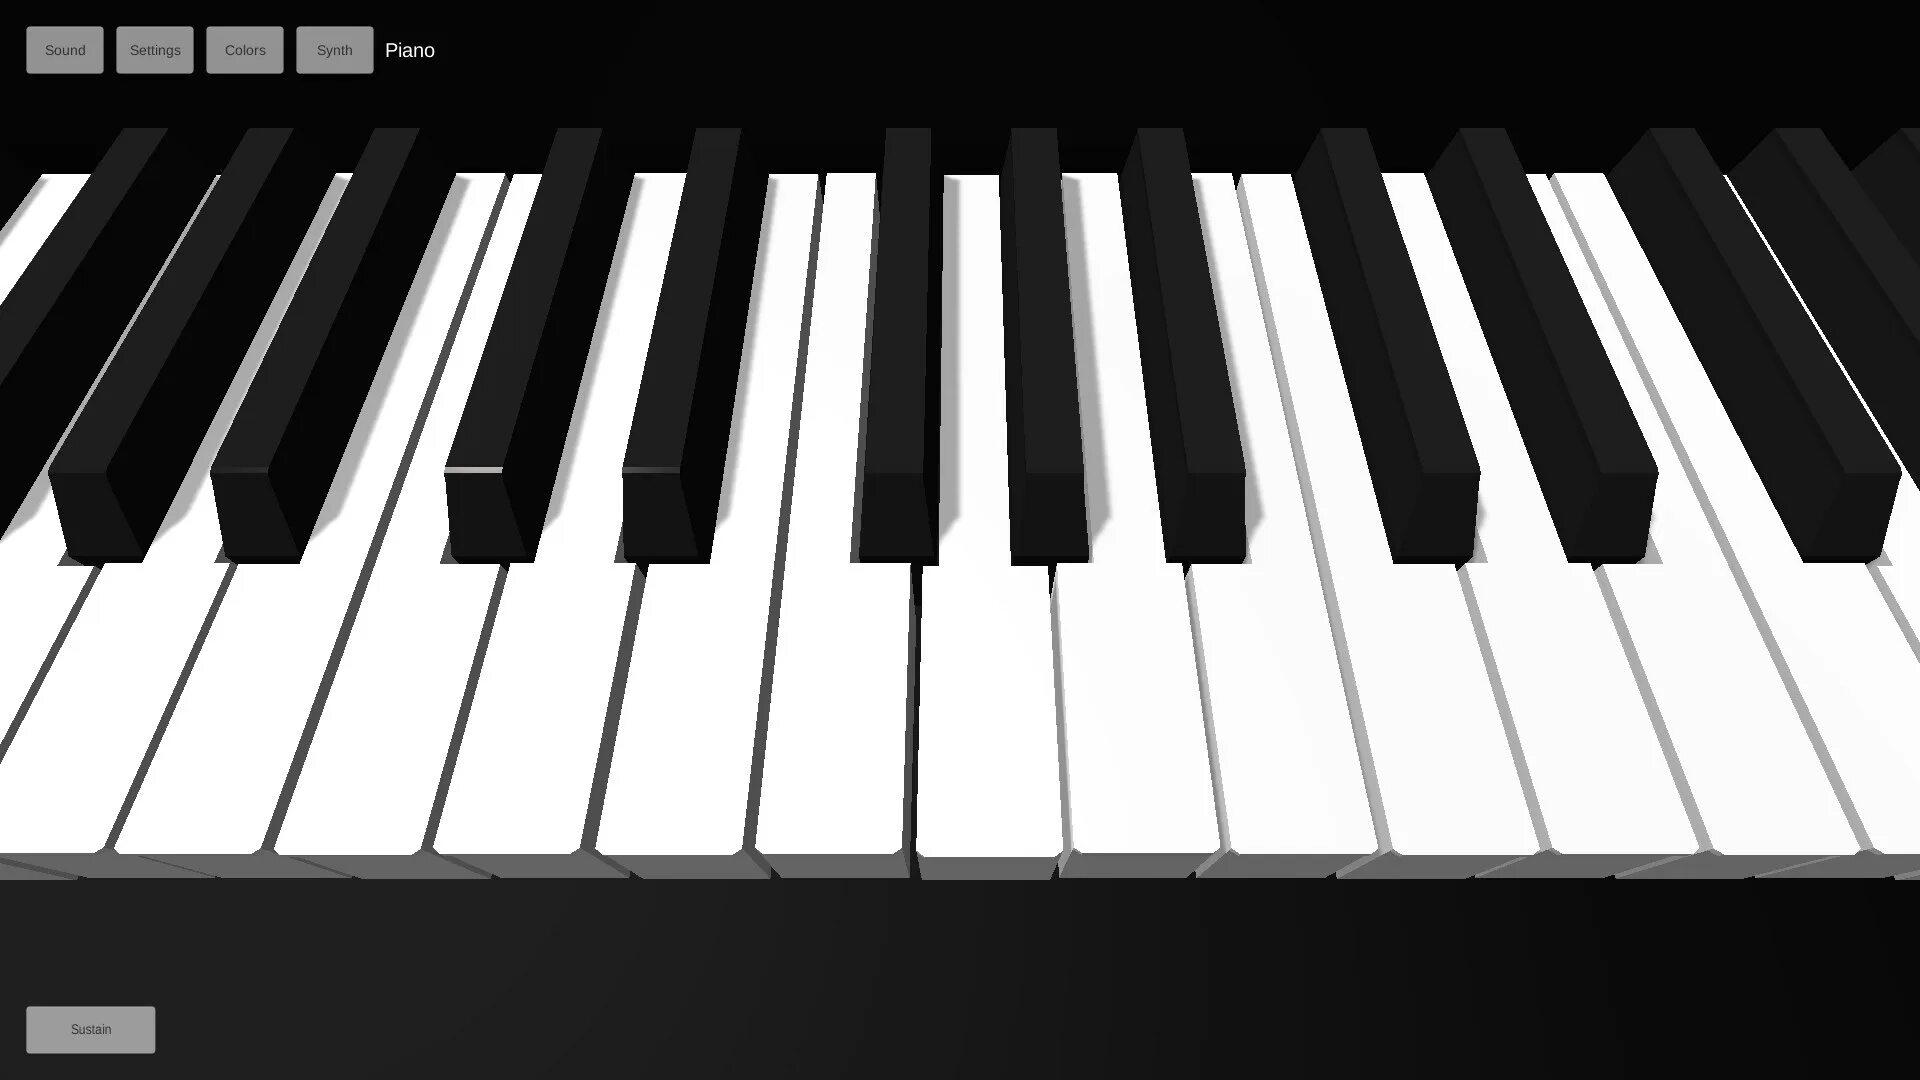 Piano sounds. Fortepiano Keyboard 3d model. Фортепианная клавиатура. Клавиши фортепиано. Клавиши пианино.